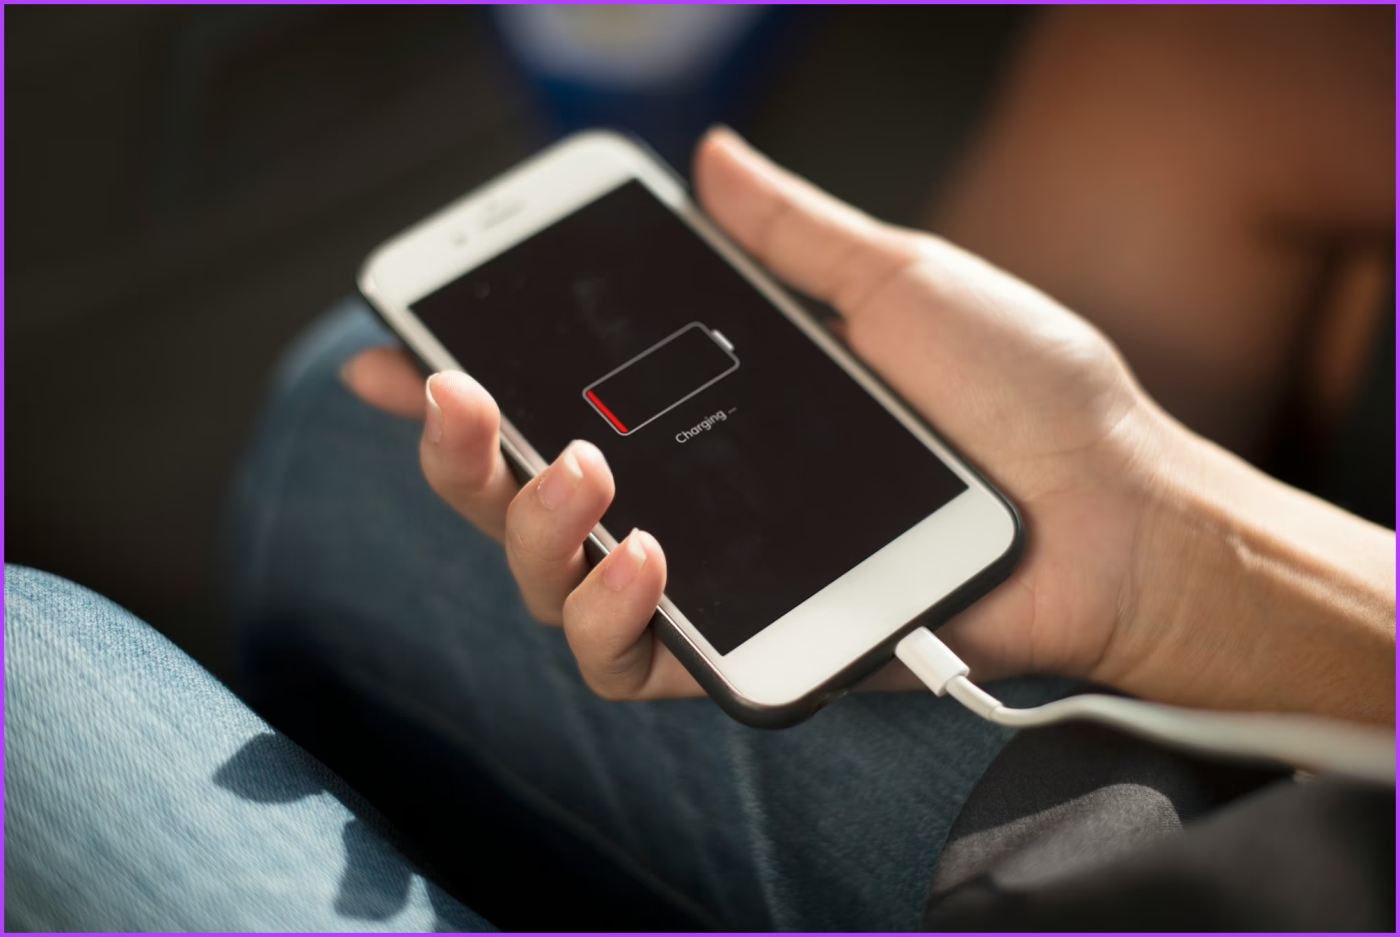 iPhone を正しく充電するための iPhone バッテリー充電のヒント